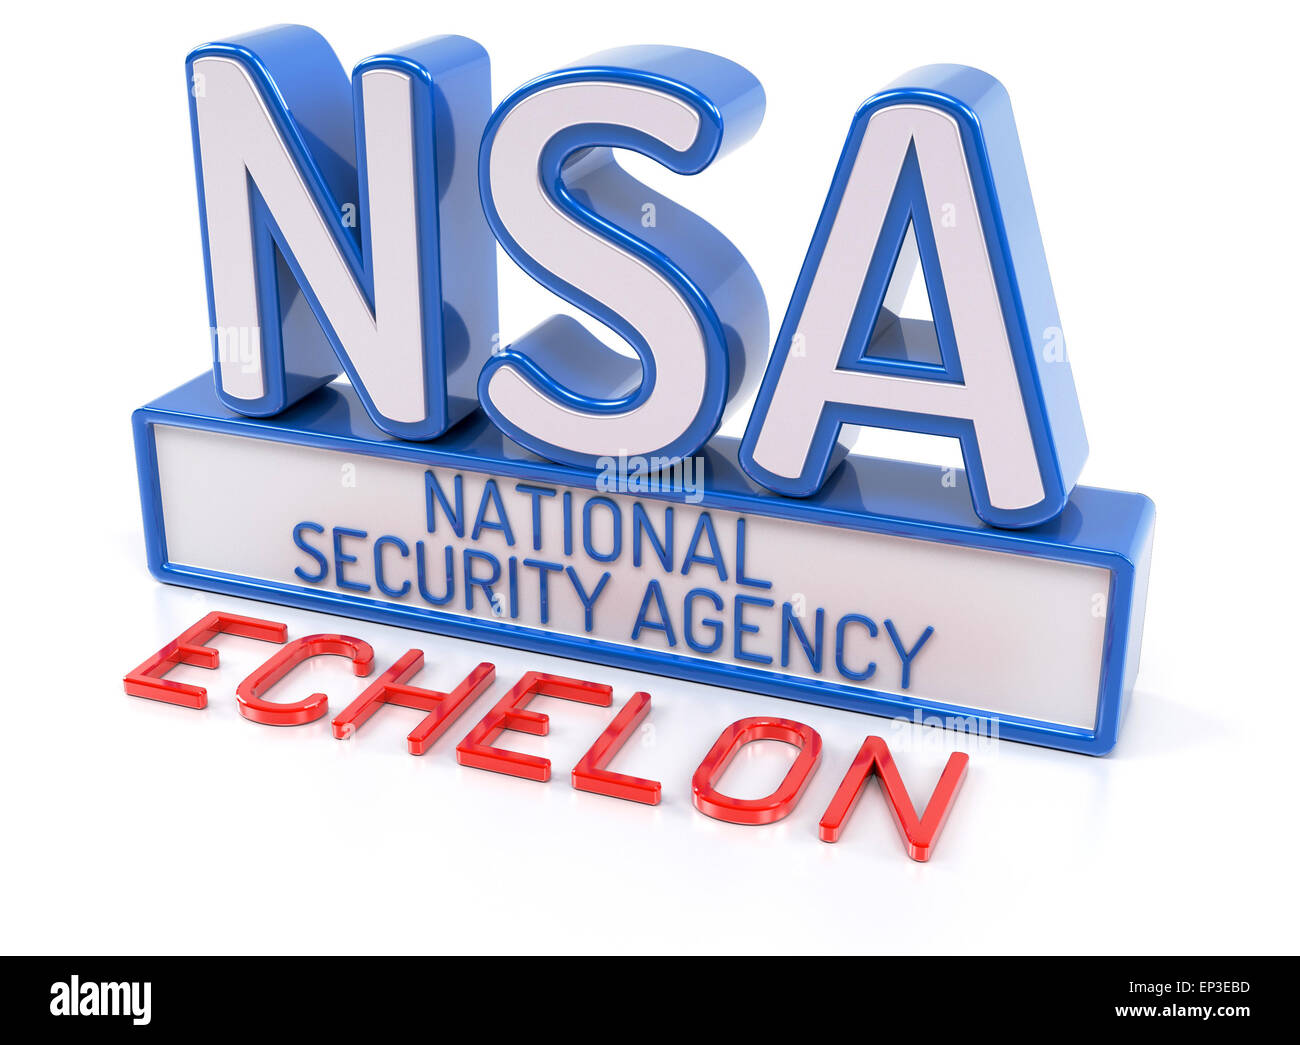 NSA ECHELON - National Security Agency Stock Photo